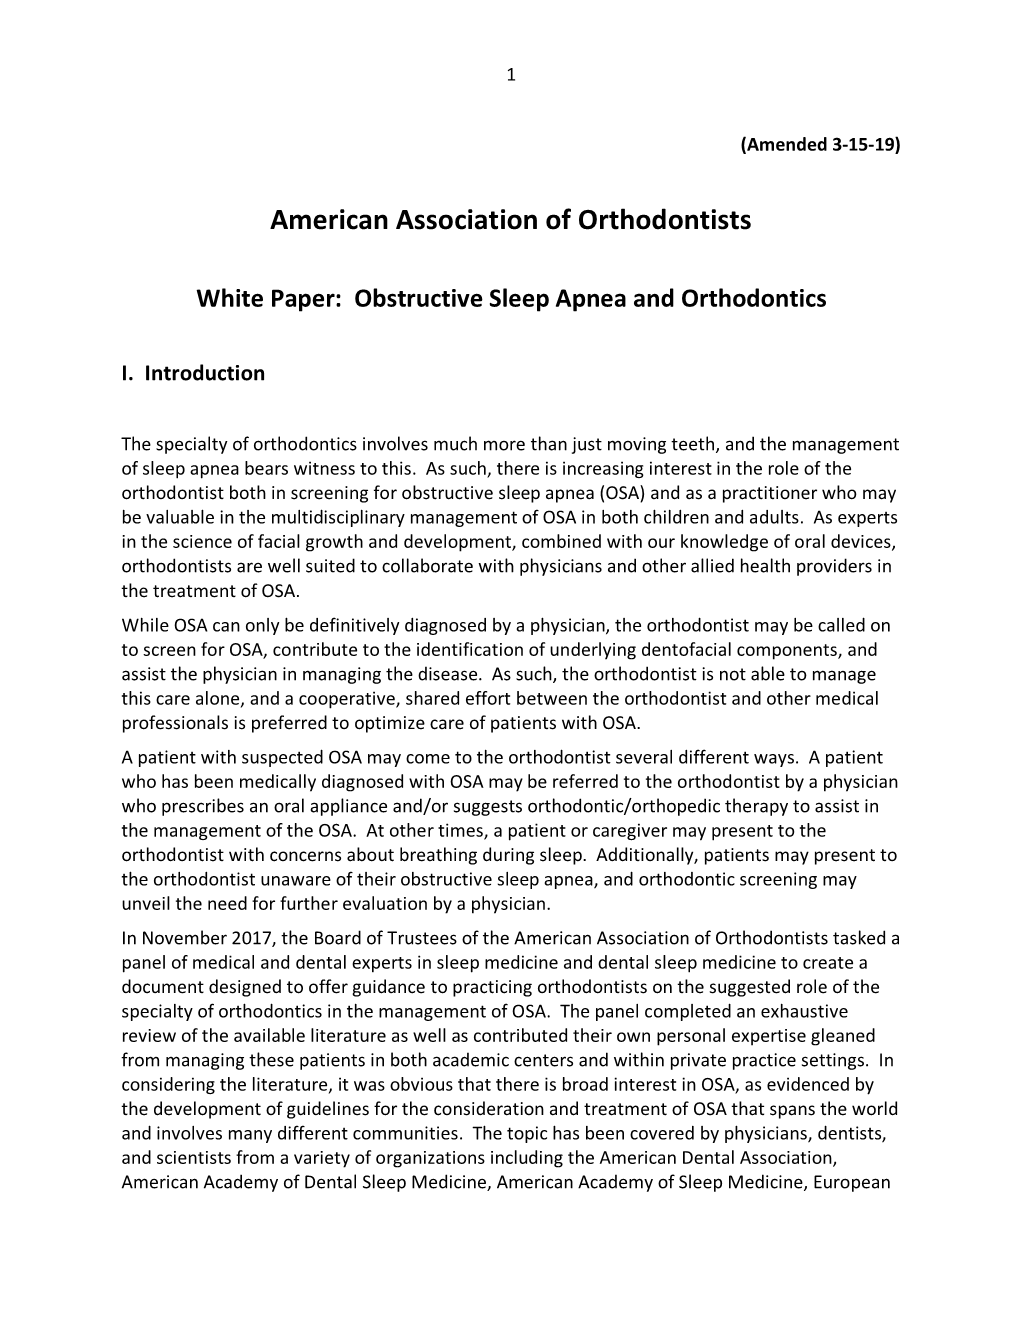 White Paper: Obstructive Sleep Apnea and Orthodontics